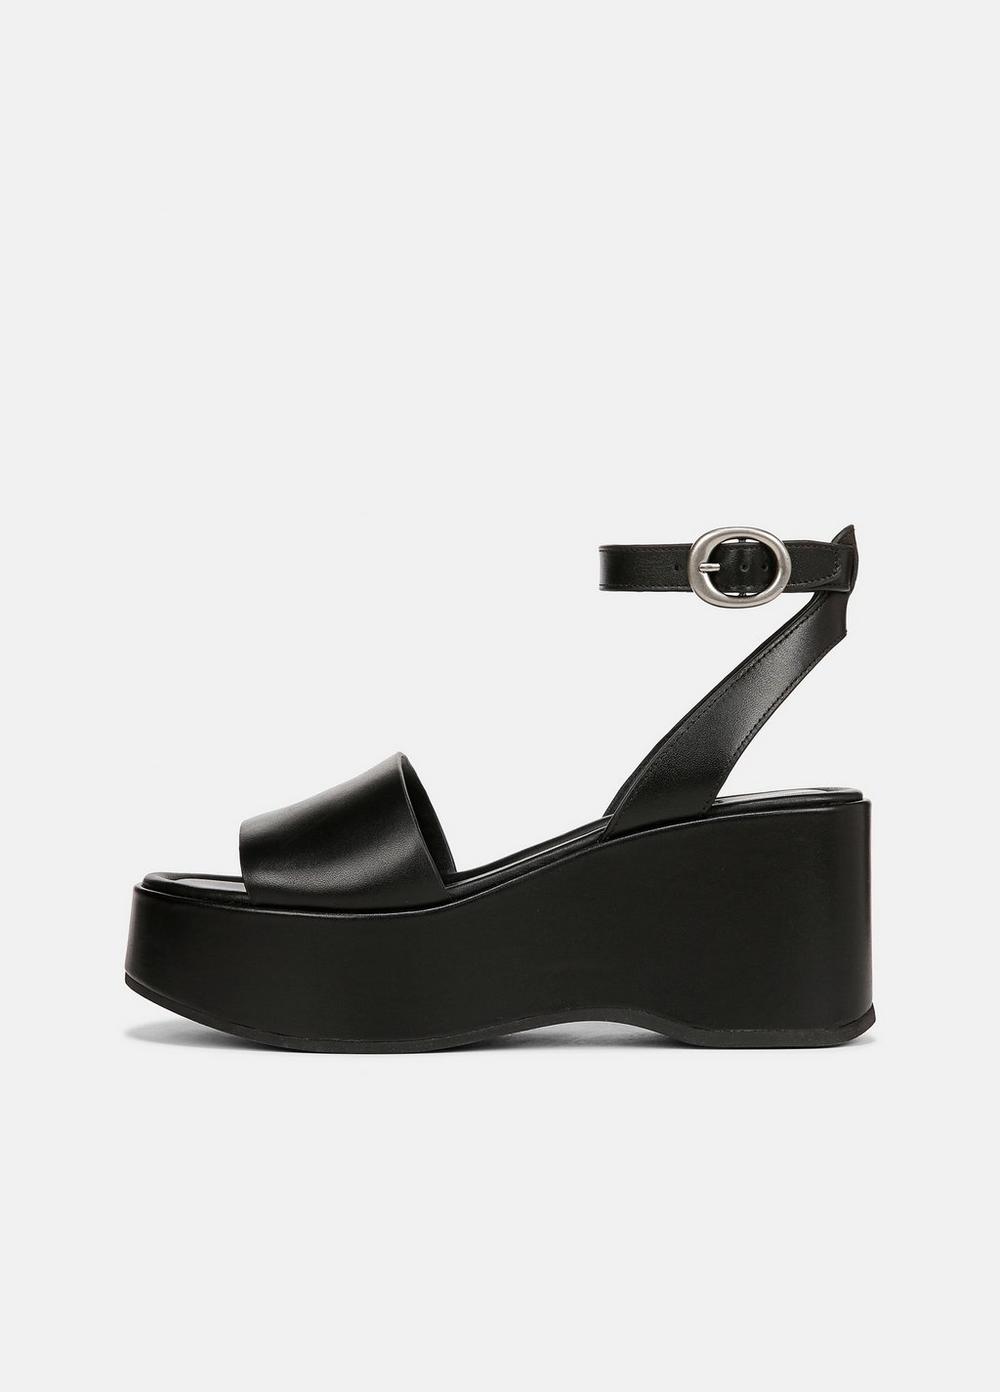 Phillipa Leather Platform Sandal, Black, Size 11 Vince